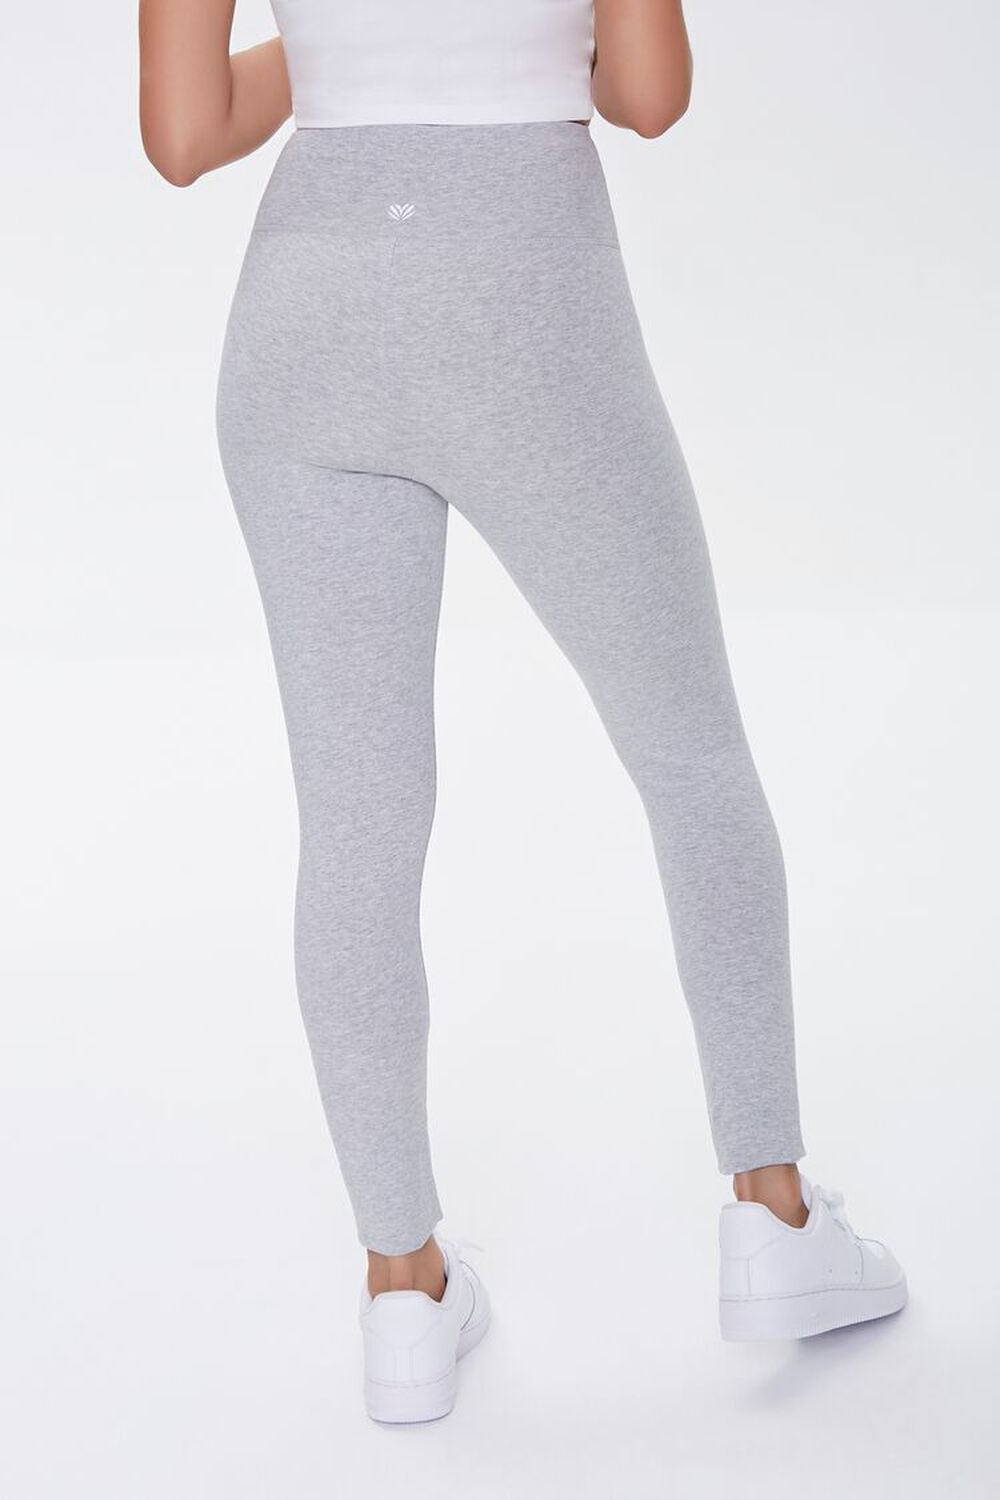 Yoga Pants Leggings Women's Size Medium (7-9) Heather Grey